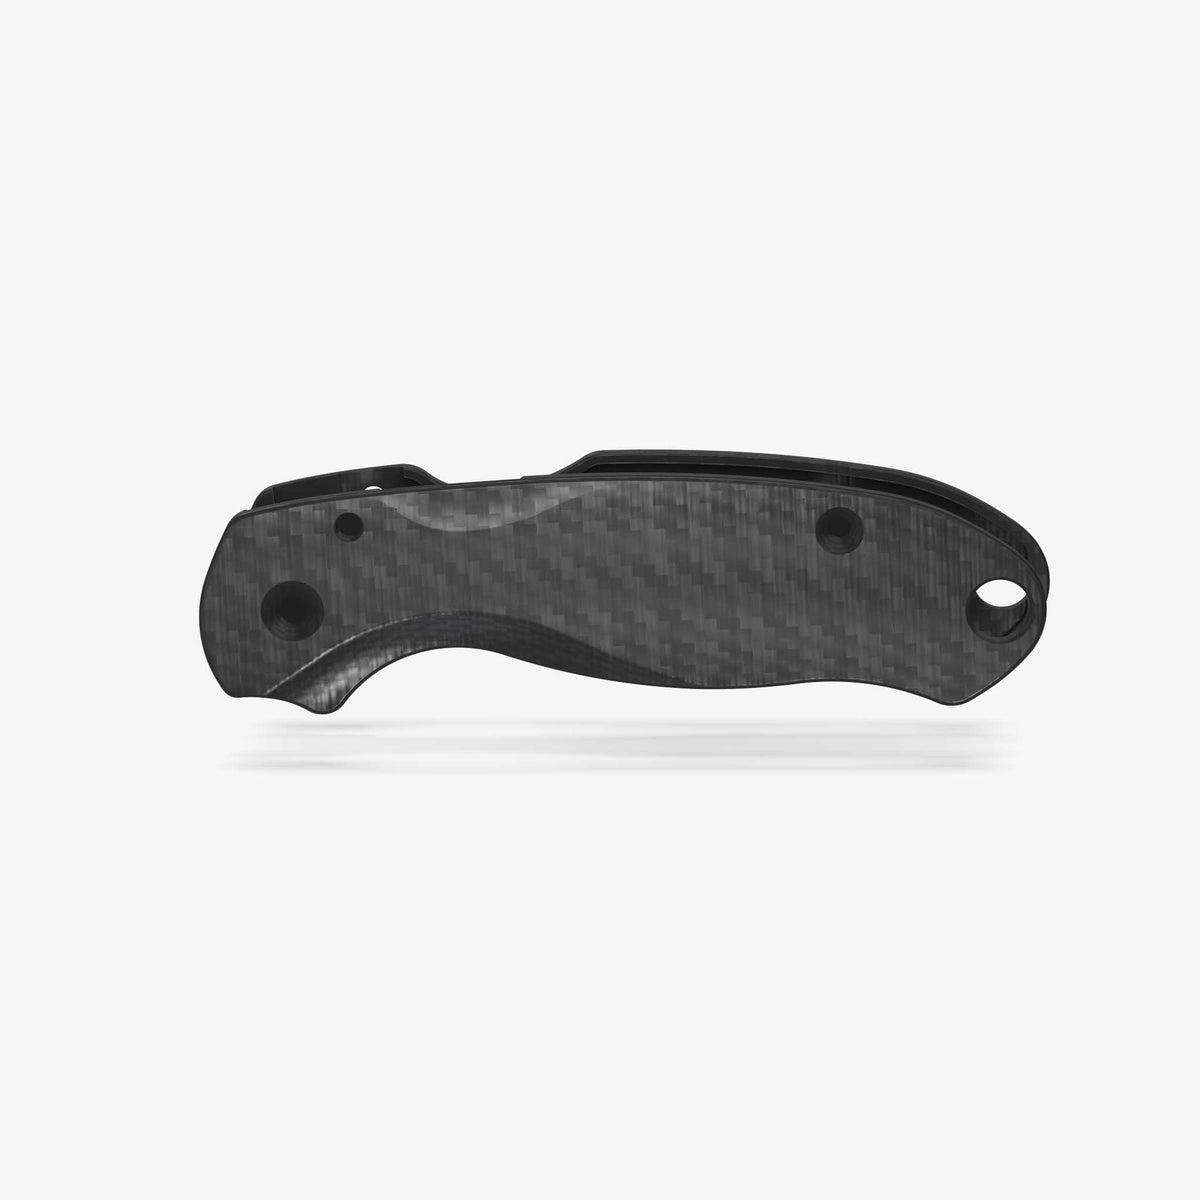 Lotus Carbon Fiber Scales for Spyderco Para 3 Knife-Basket Weave